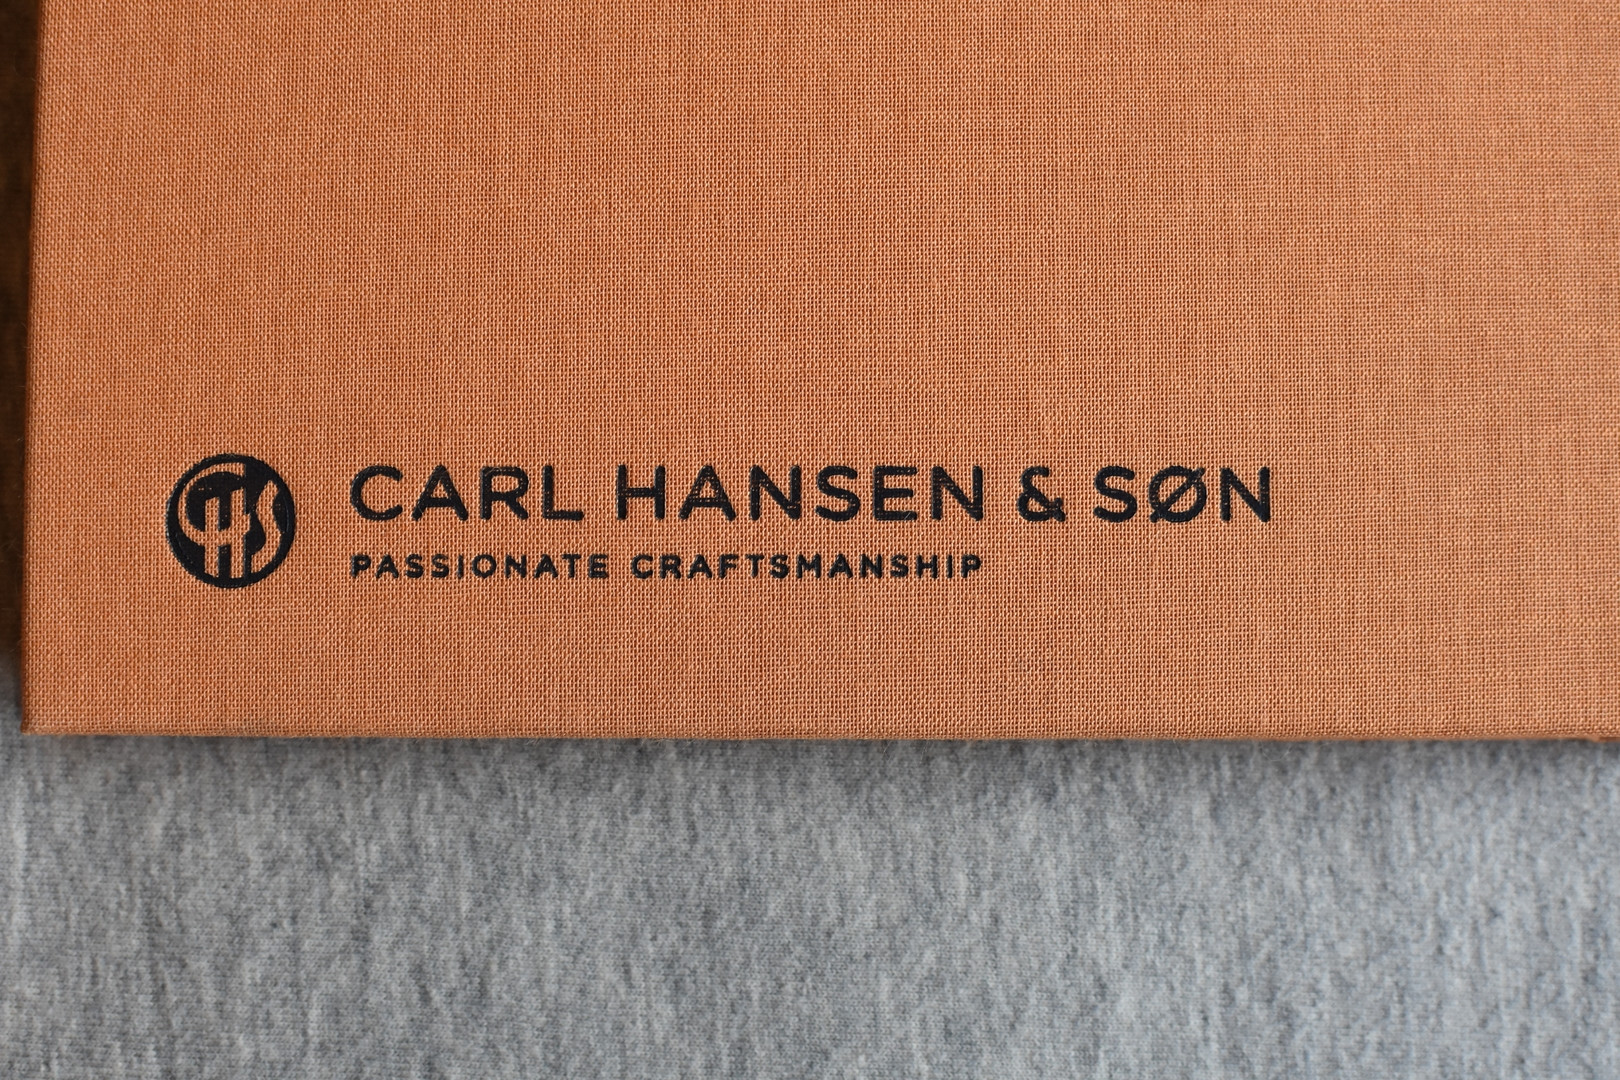 Carl Hansen #139